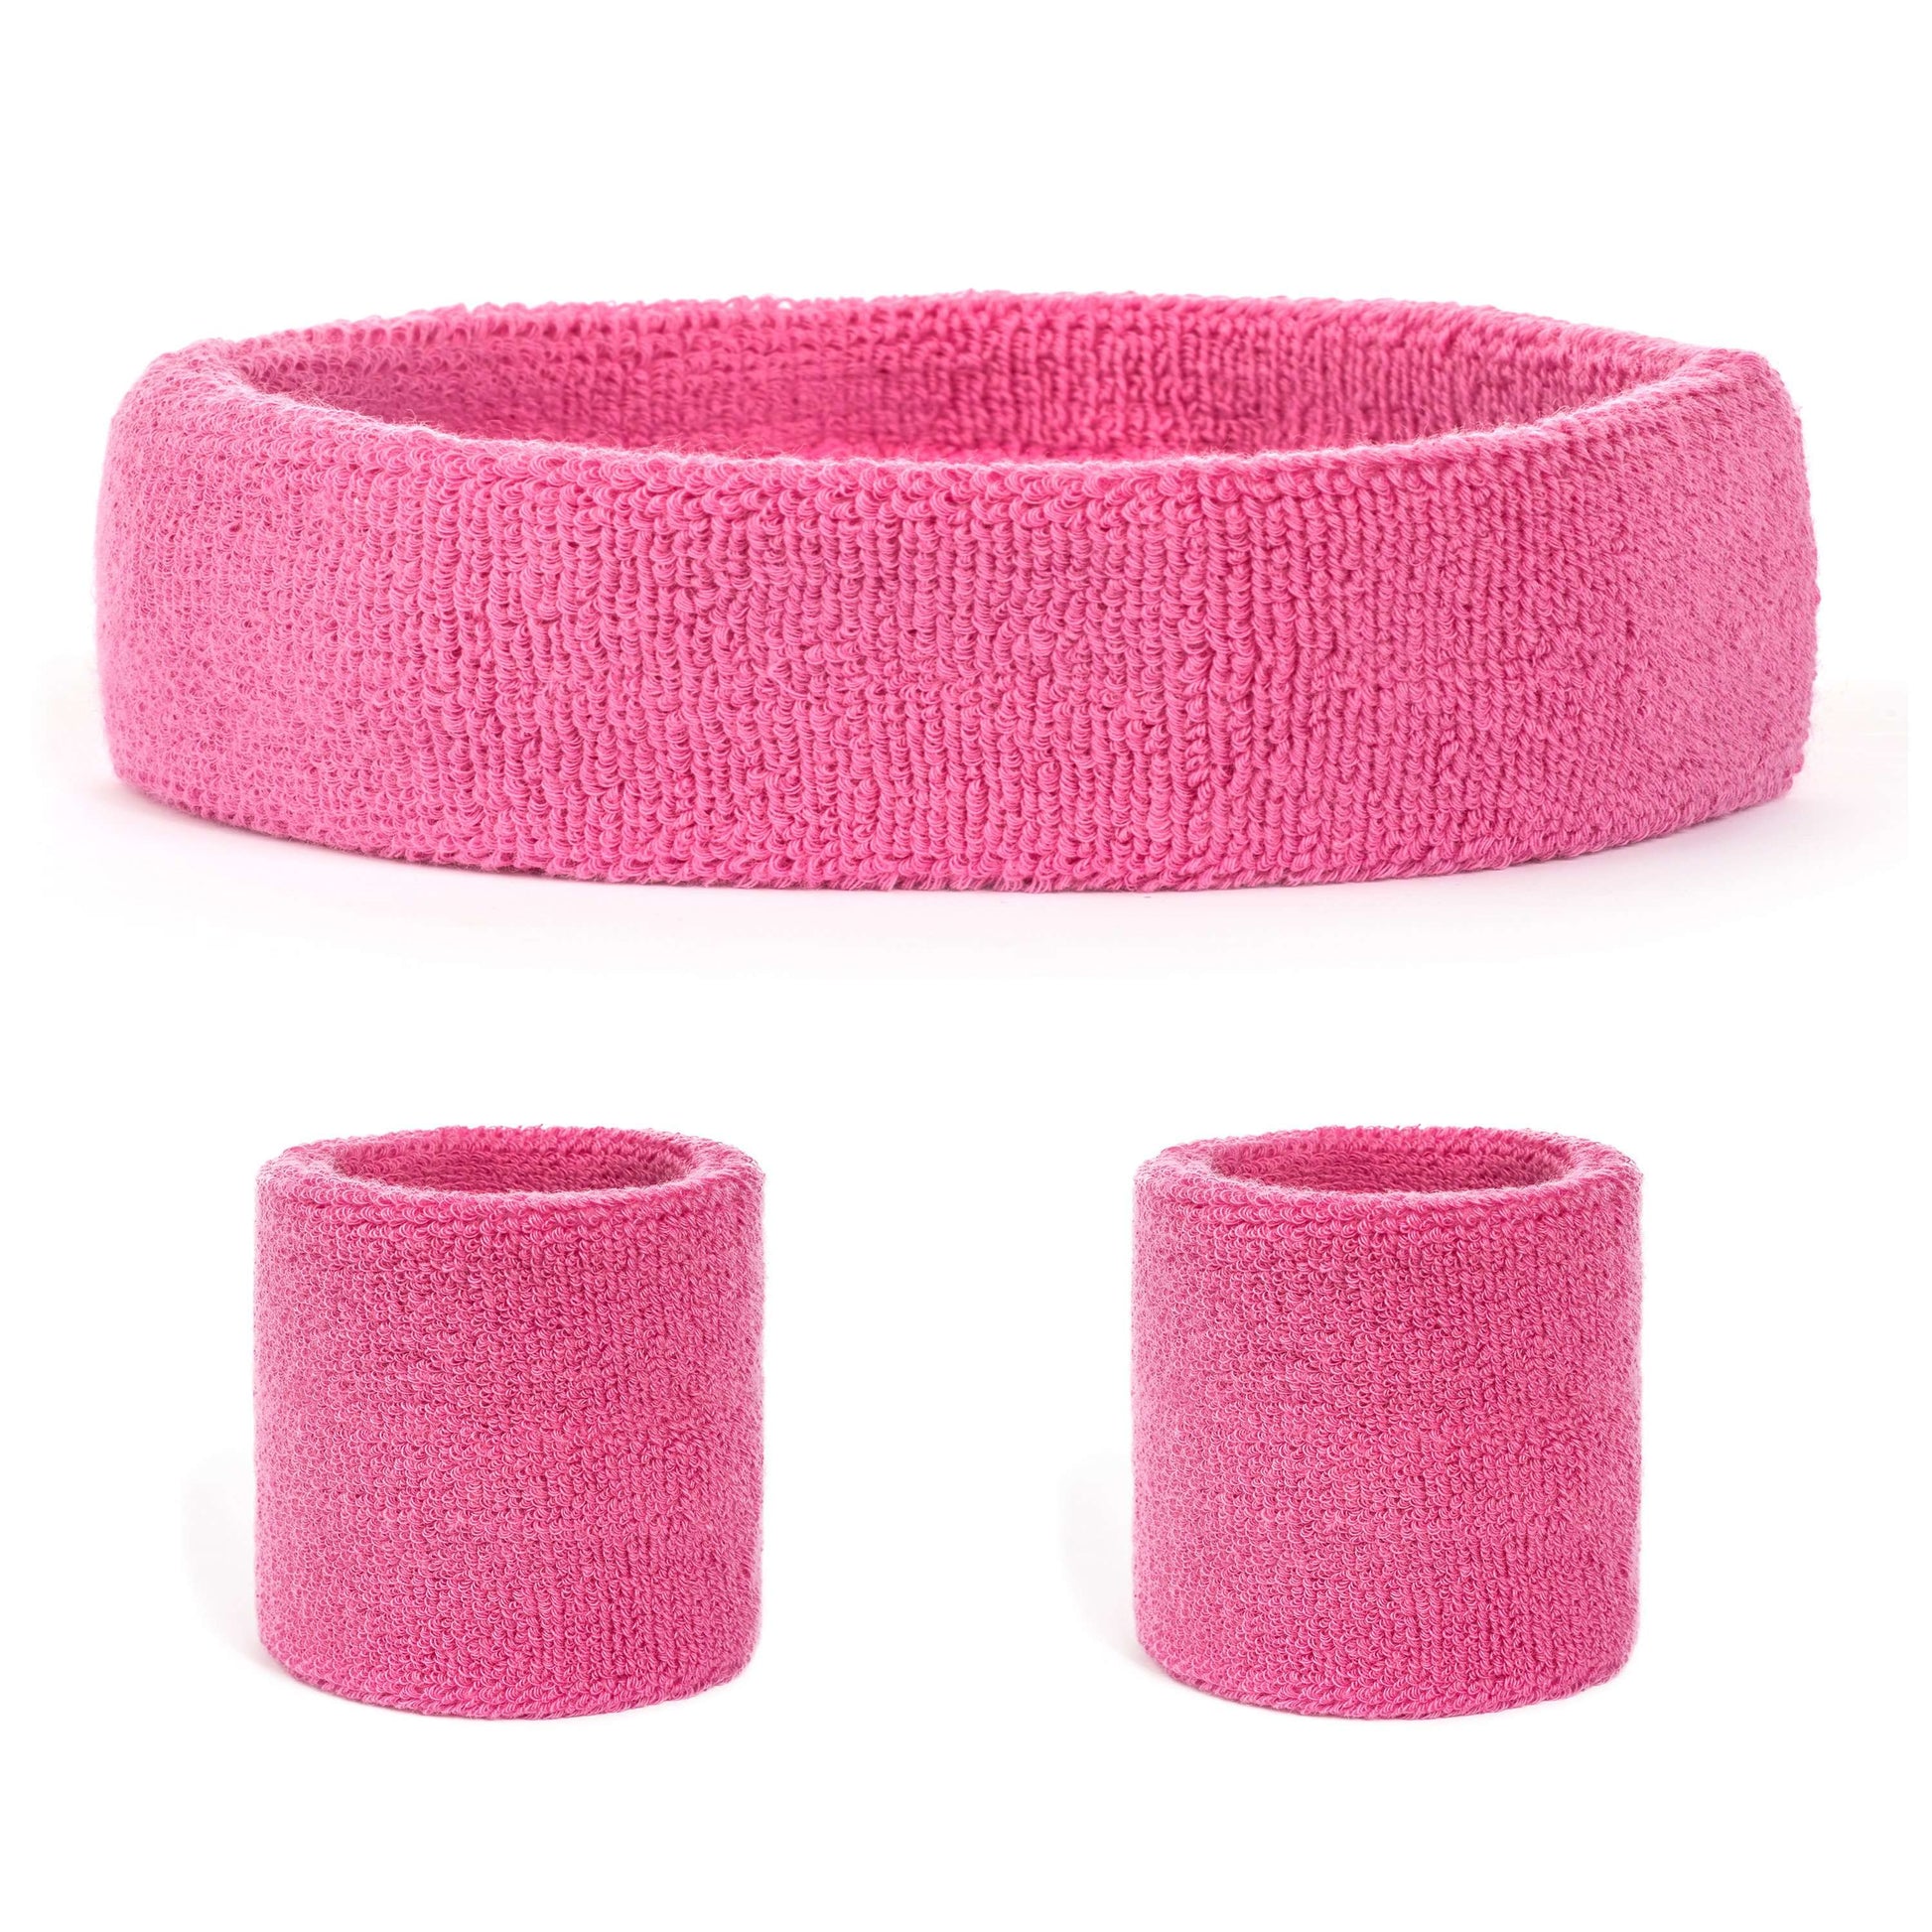 Suddora Sweatband Set (1 Headband & 2 Wristbands) - Pink